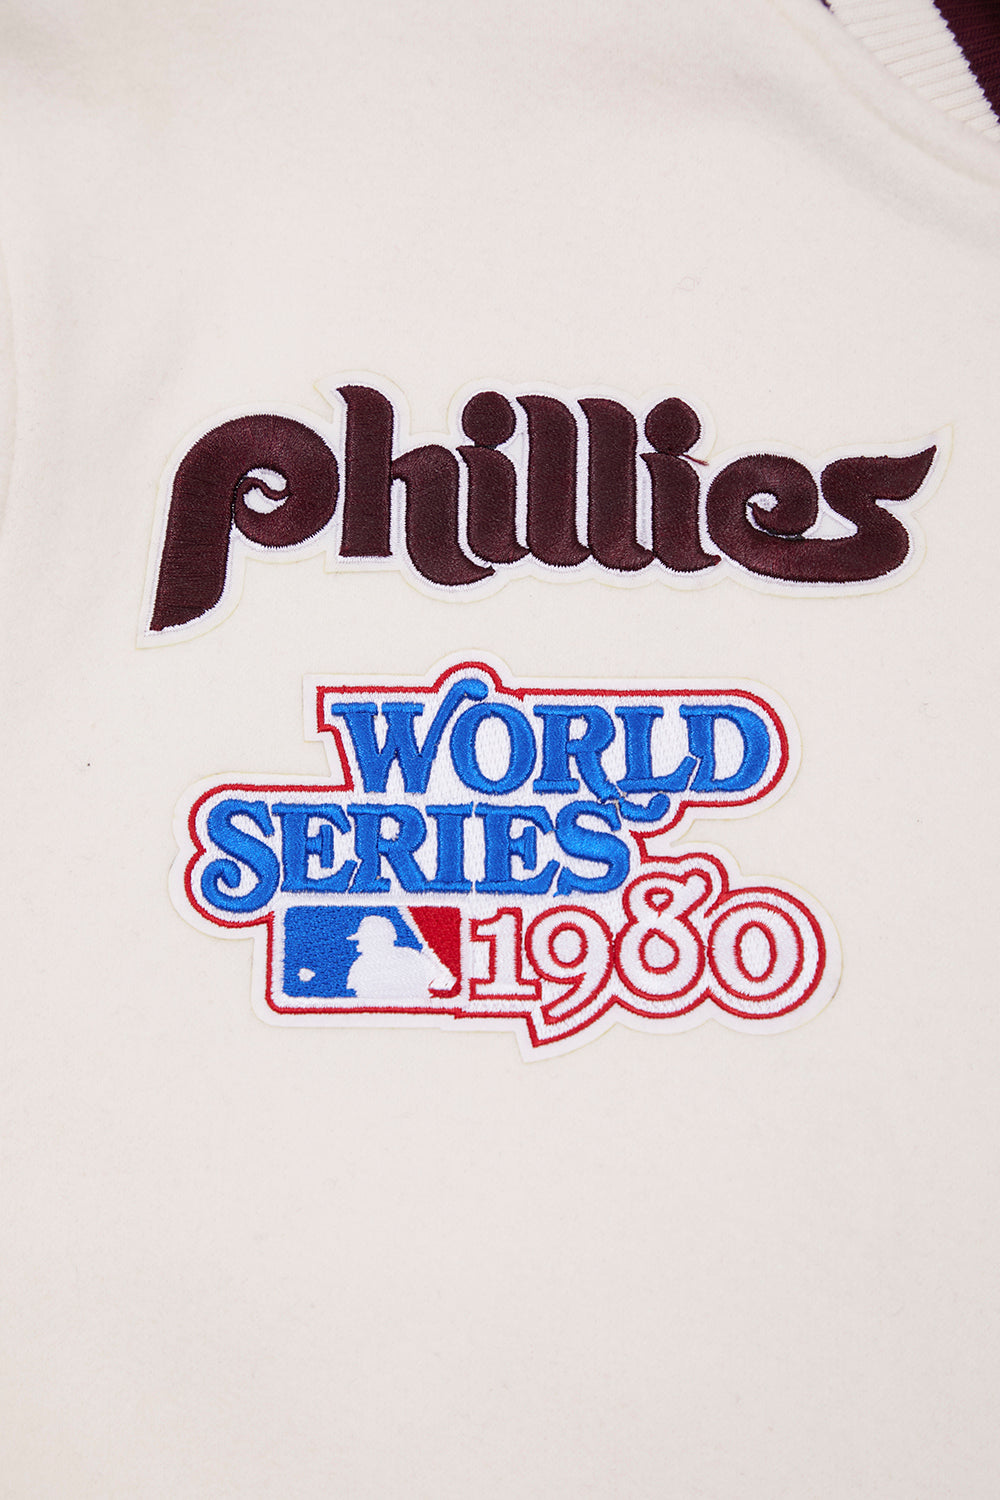 Men's Pro Standard Light Blue Philadelphia Phillies Cooperstown Collection  Retro Classic T-Shirt